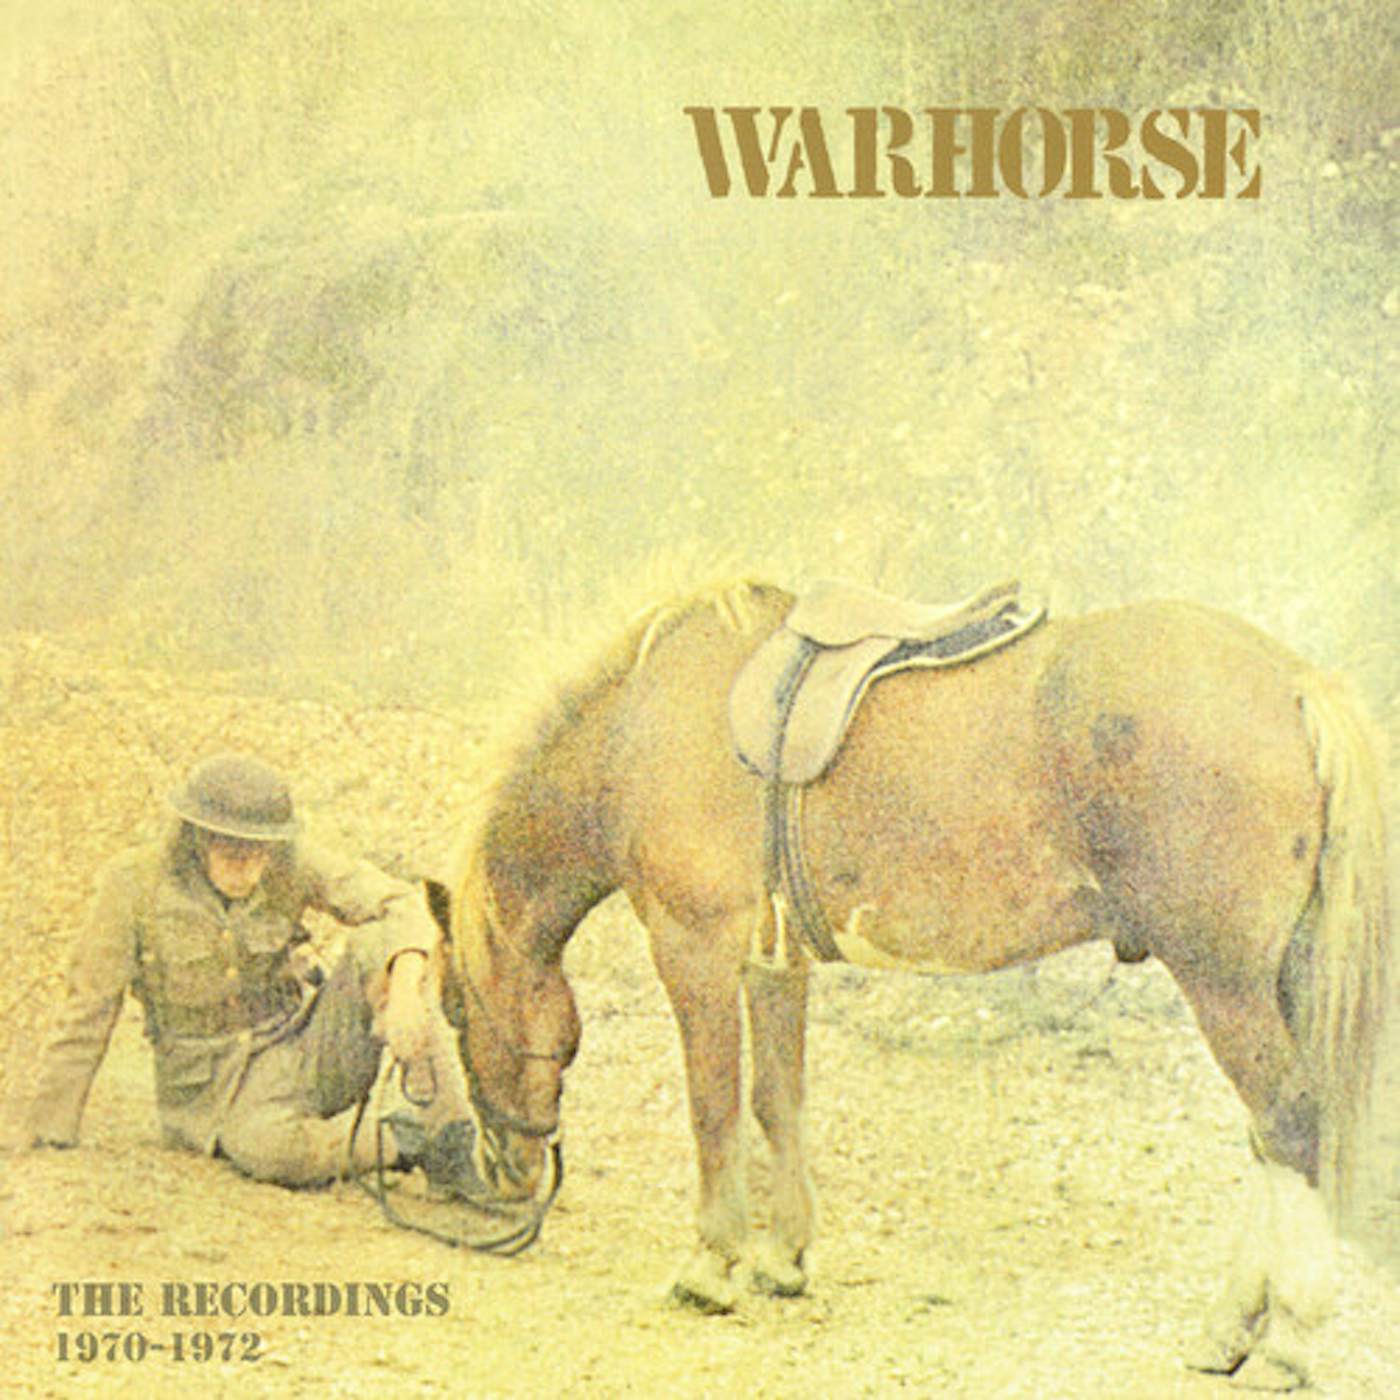 Warhorse RECORDINGS 1970-1972 CD